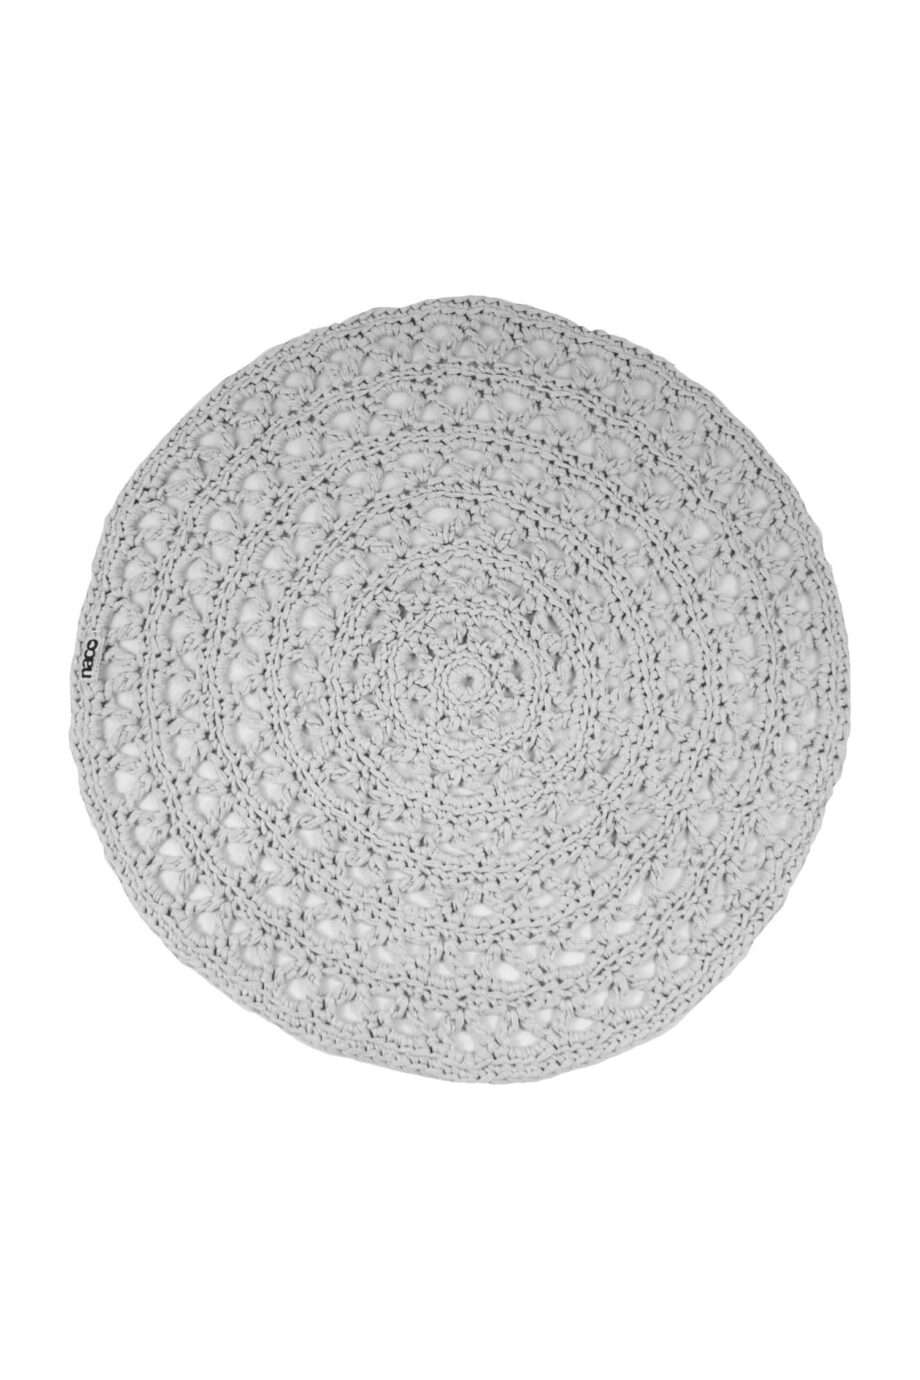 arab white crochet cotton floor mat small